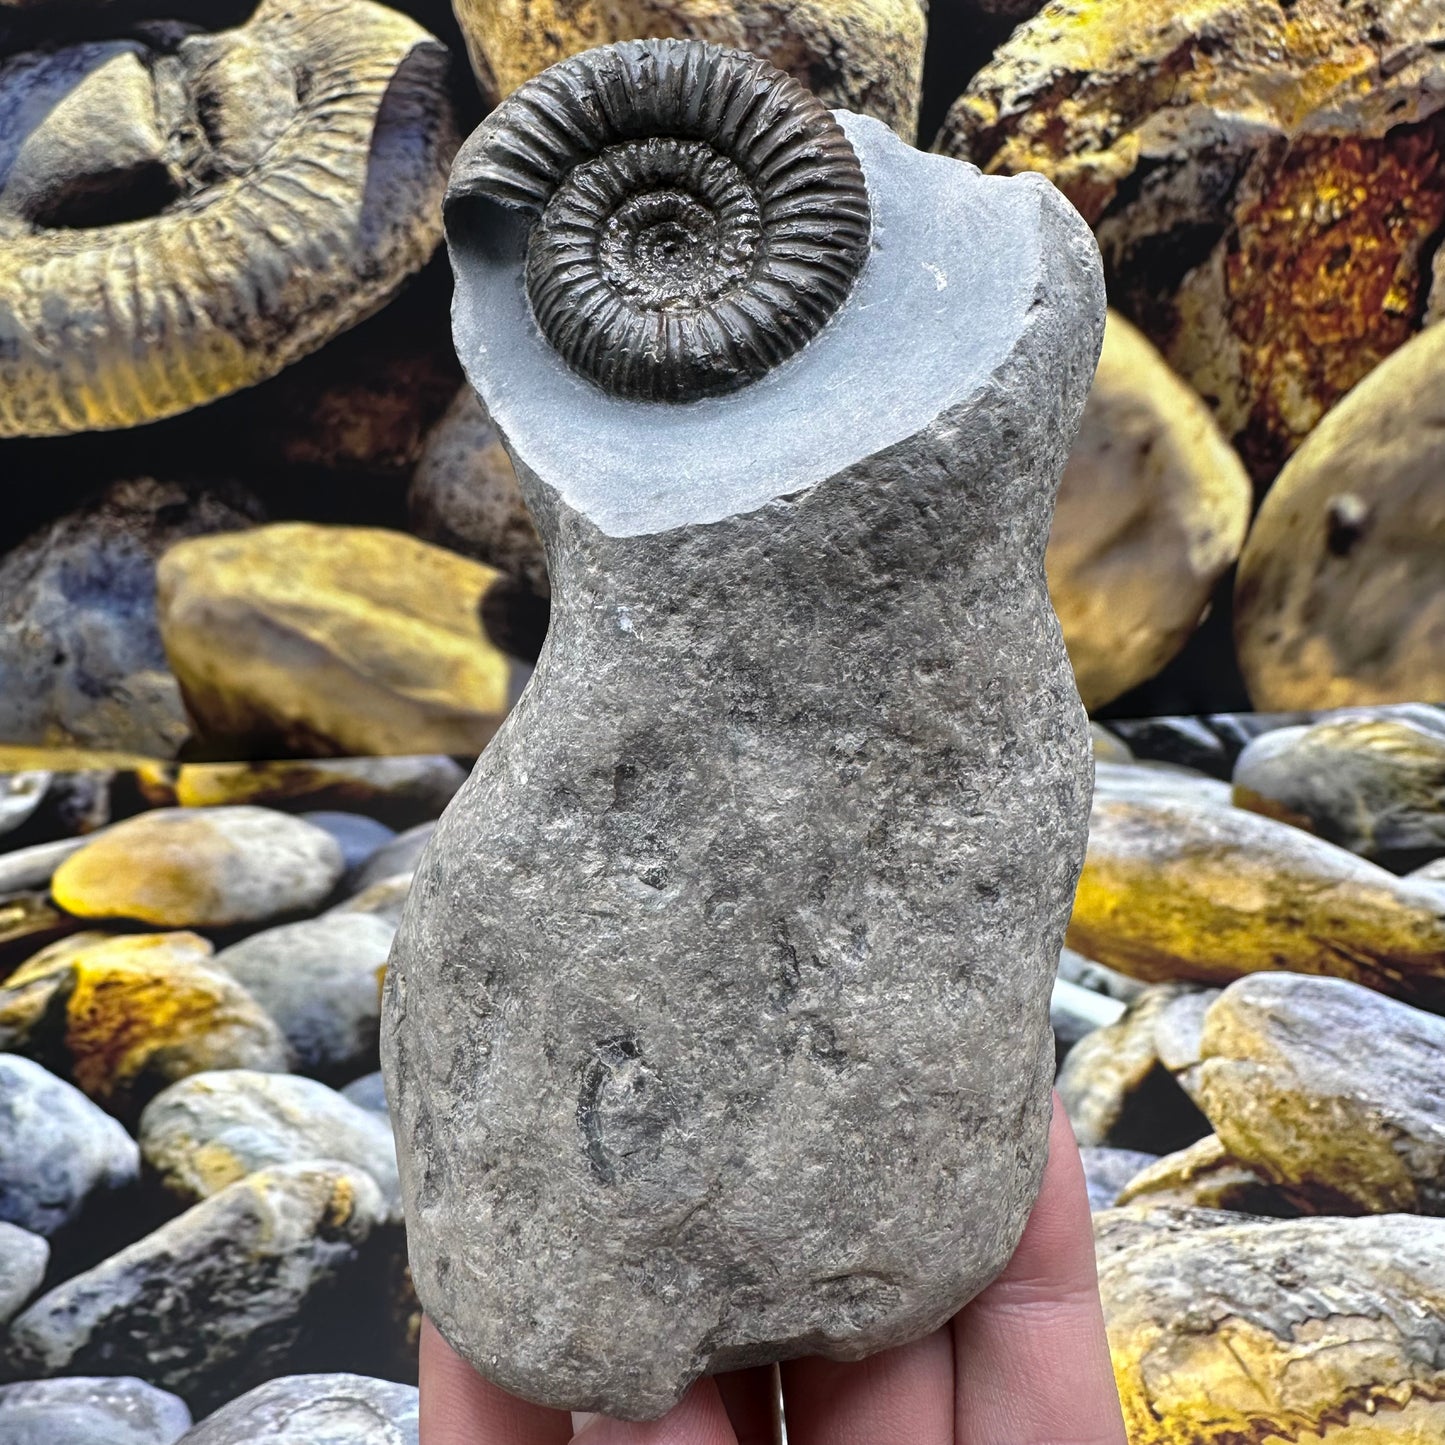 Catacoeloceras jordani ammonite fossil - Whitby, North Yorkshire